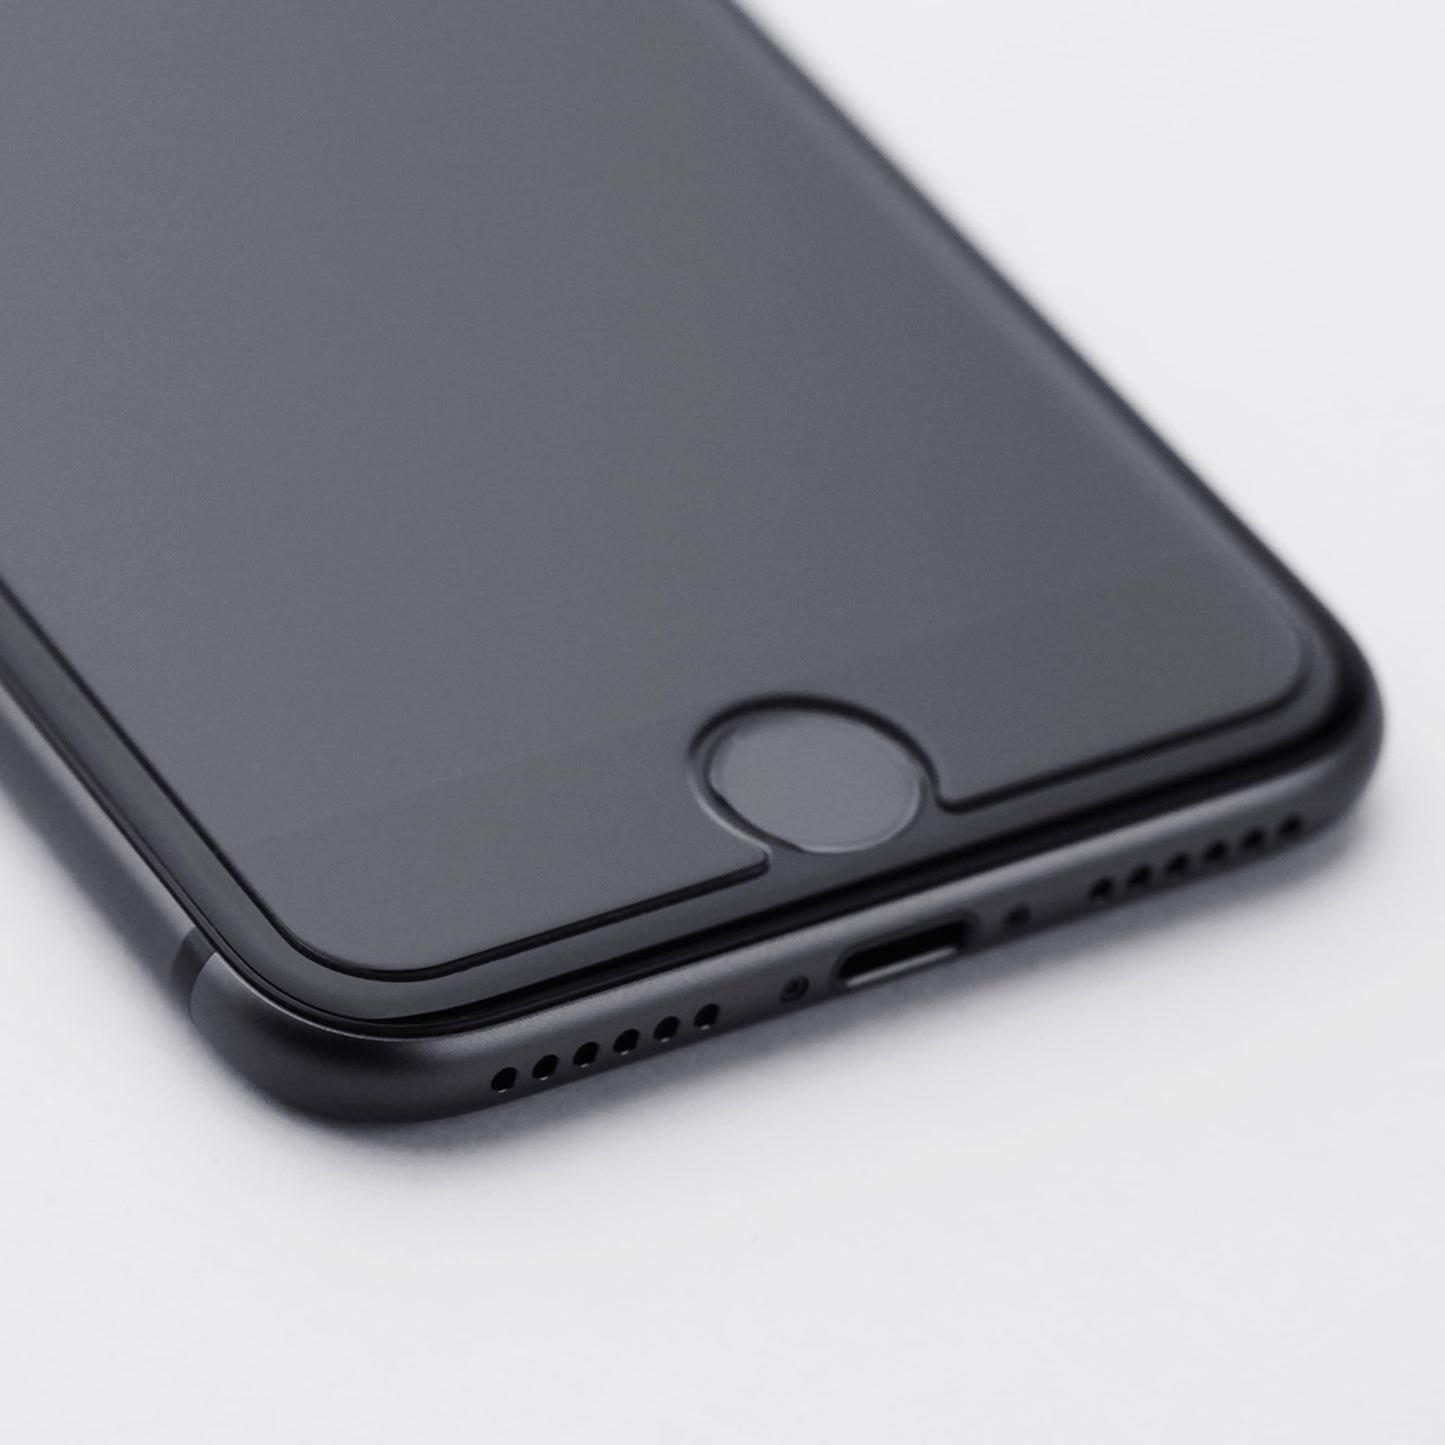 iPhone 7 Plus - sapphire glass